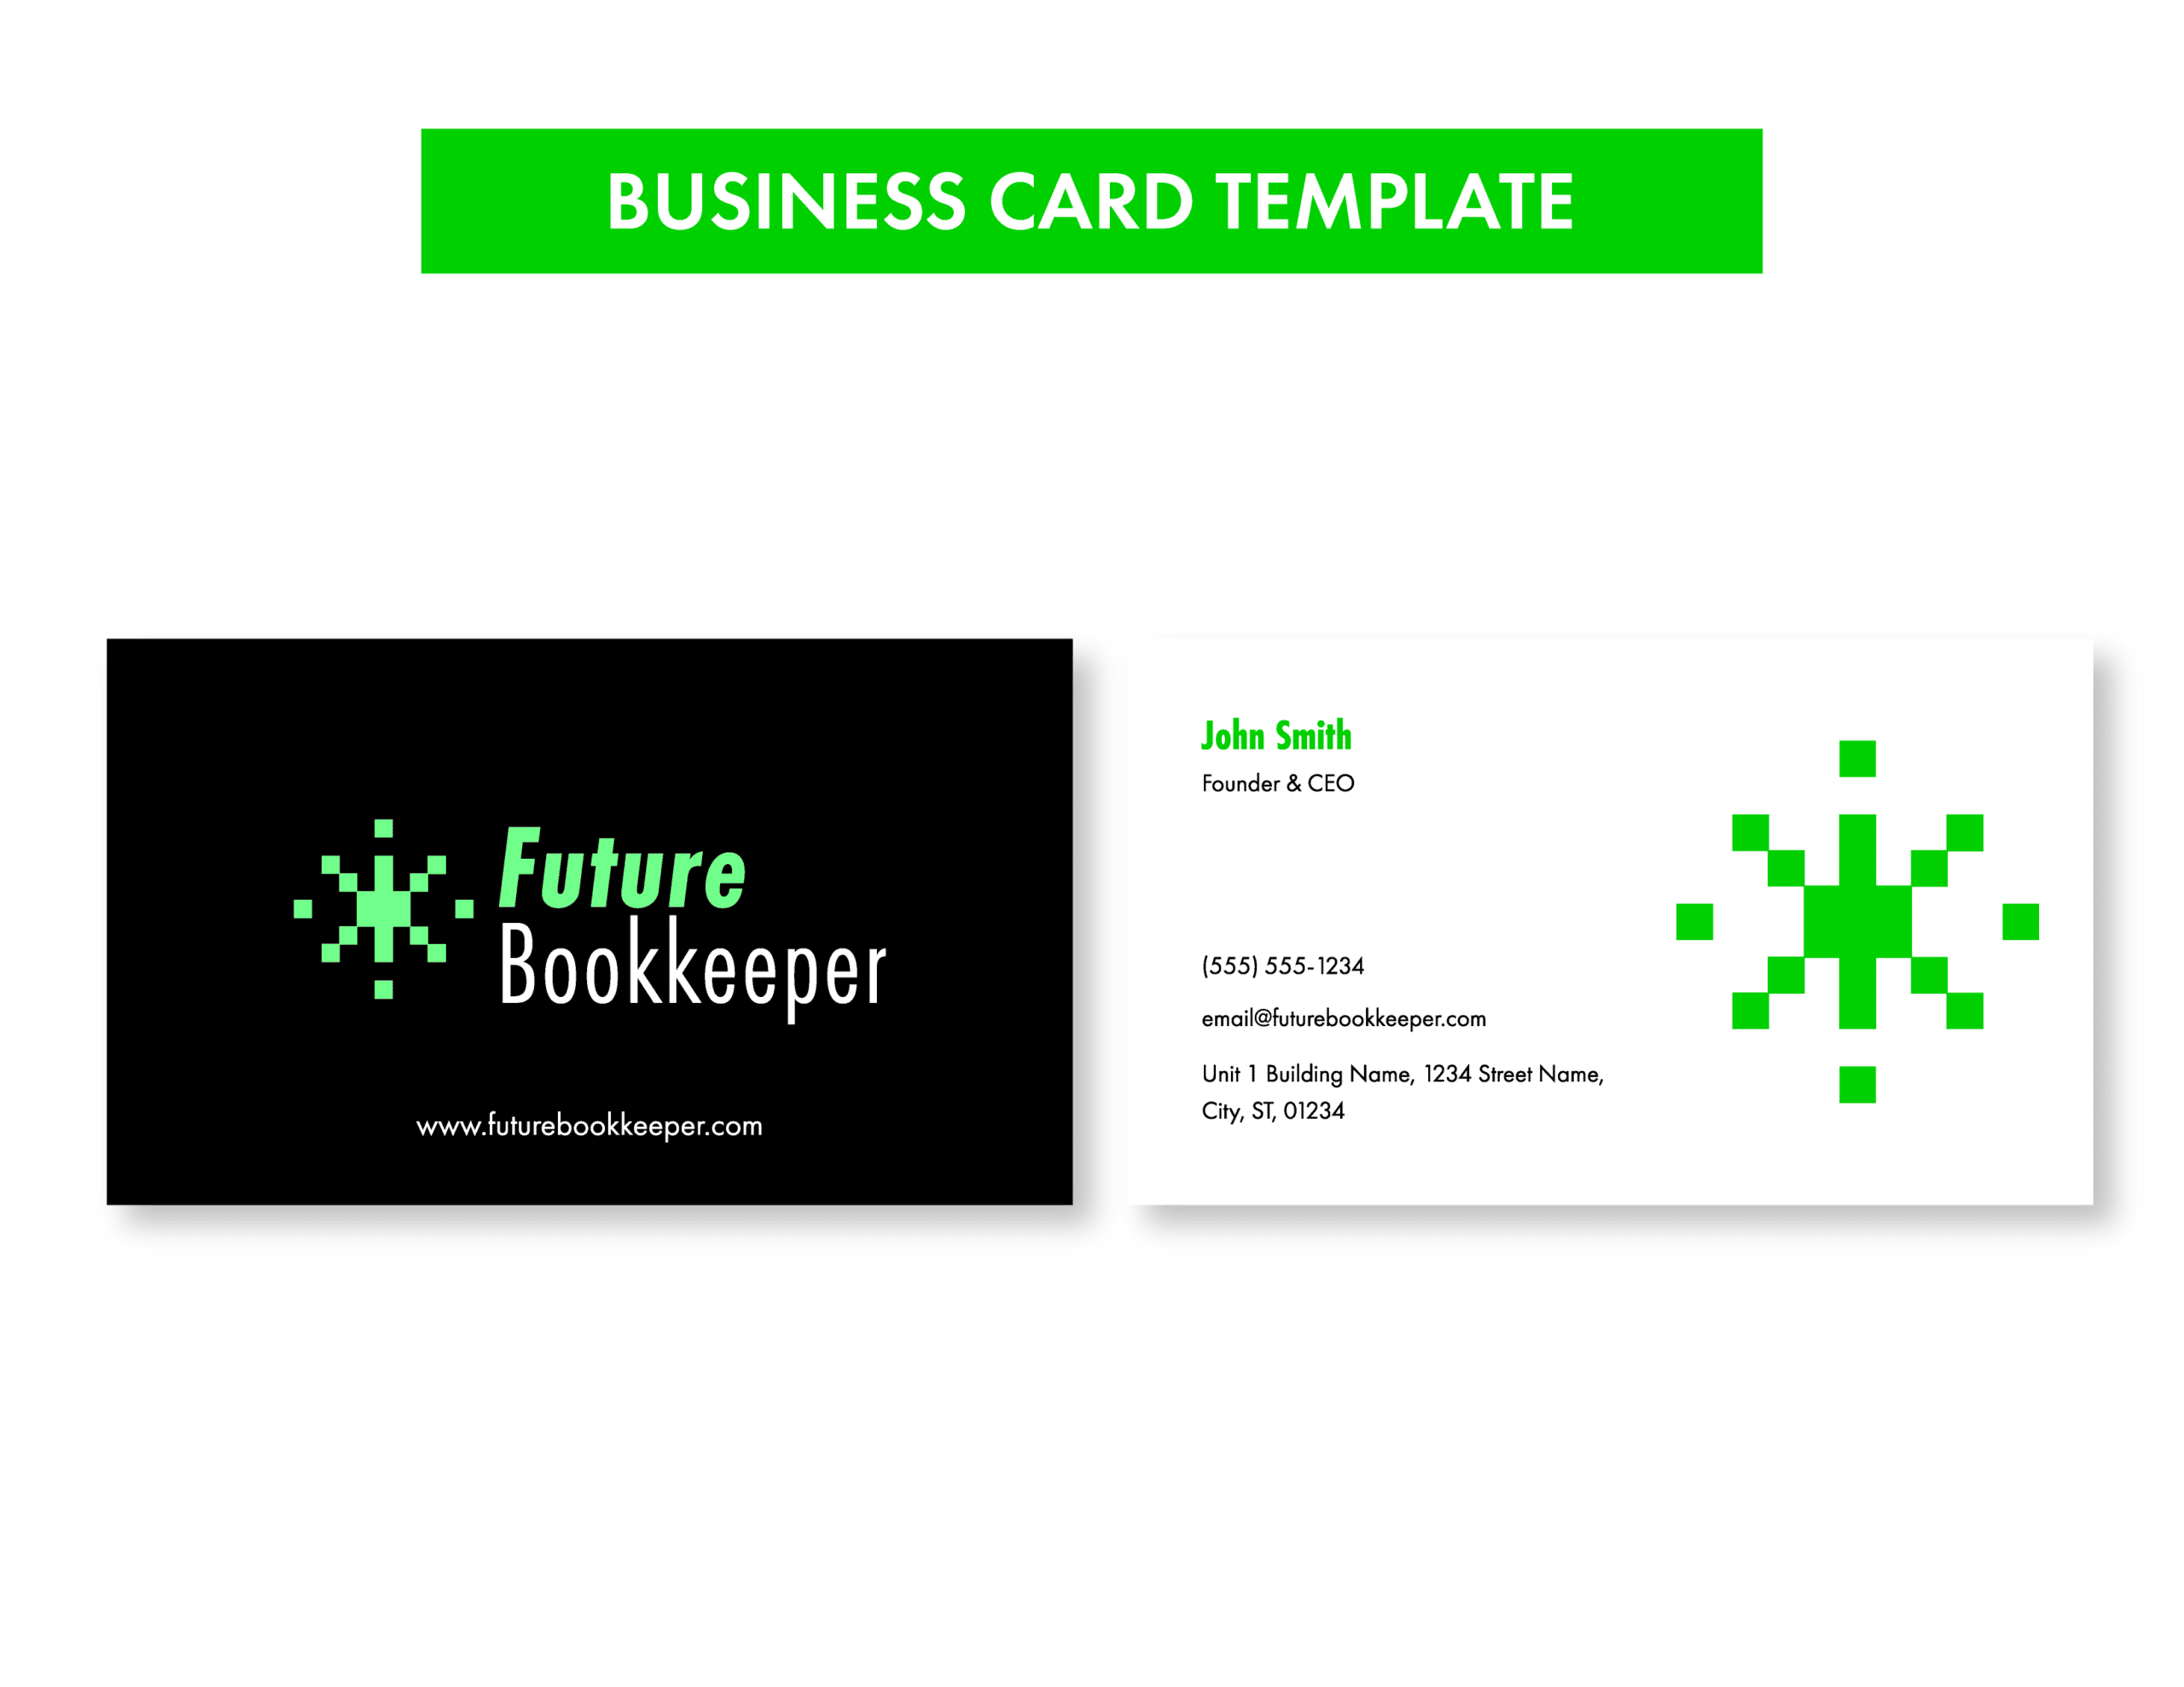 04Future__Business Card Template